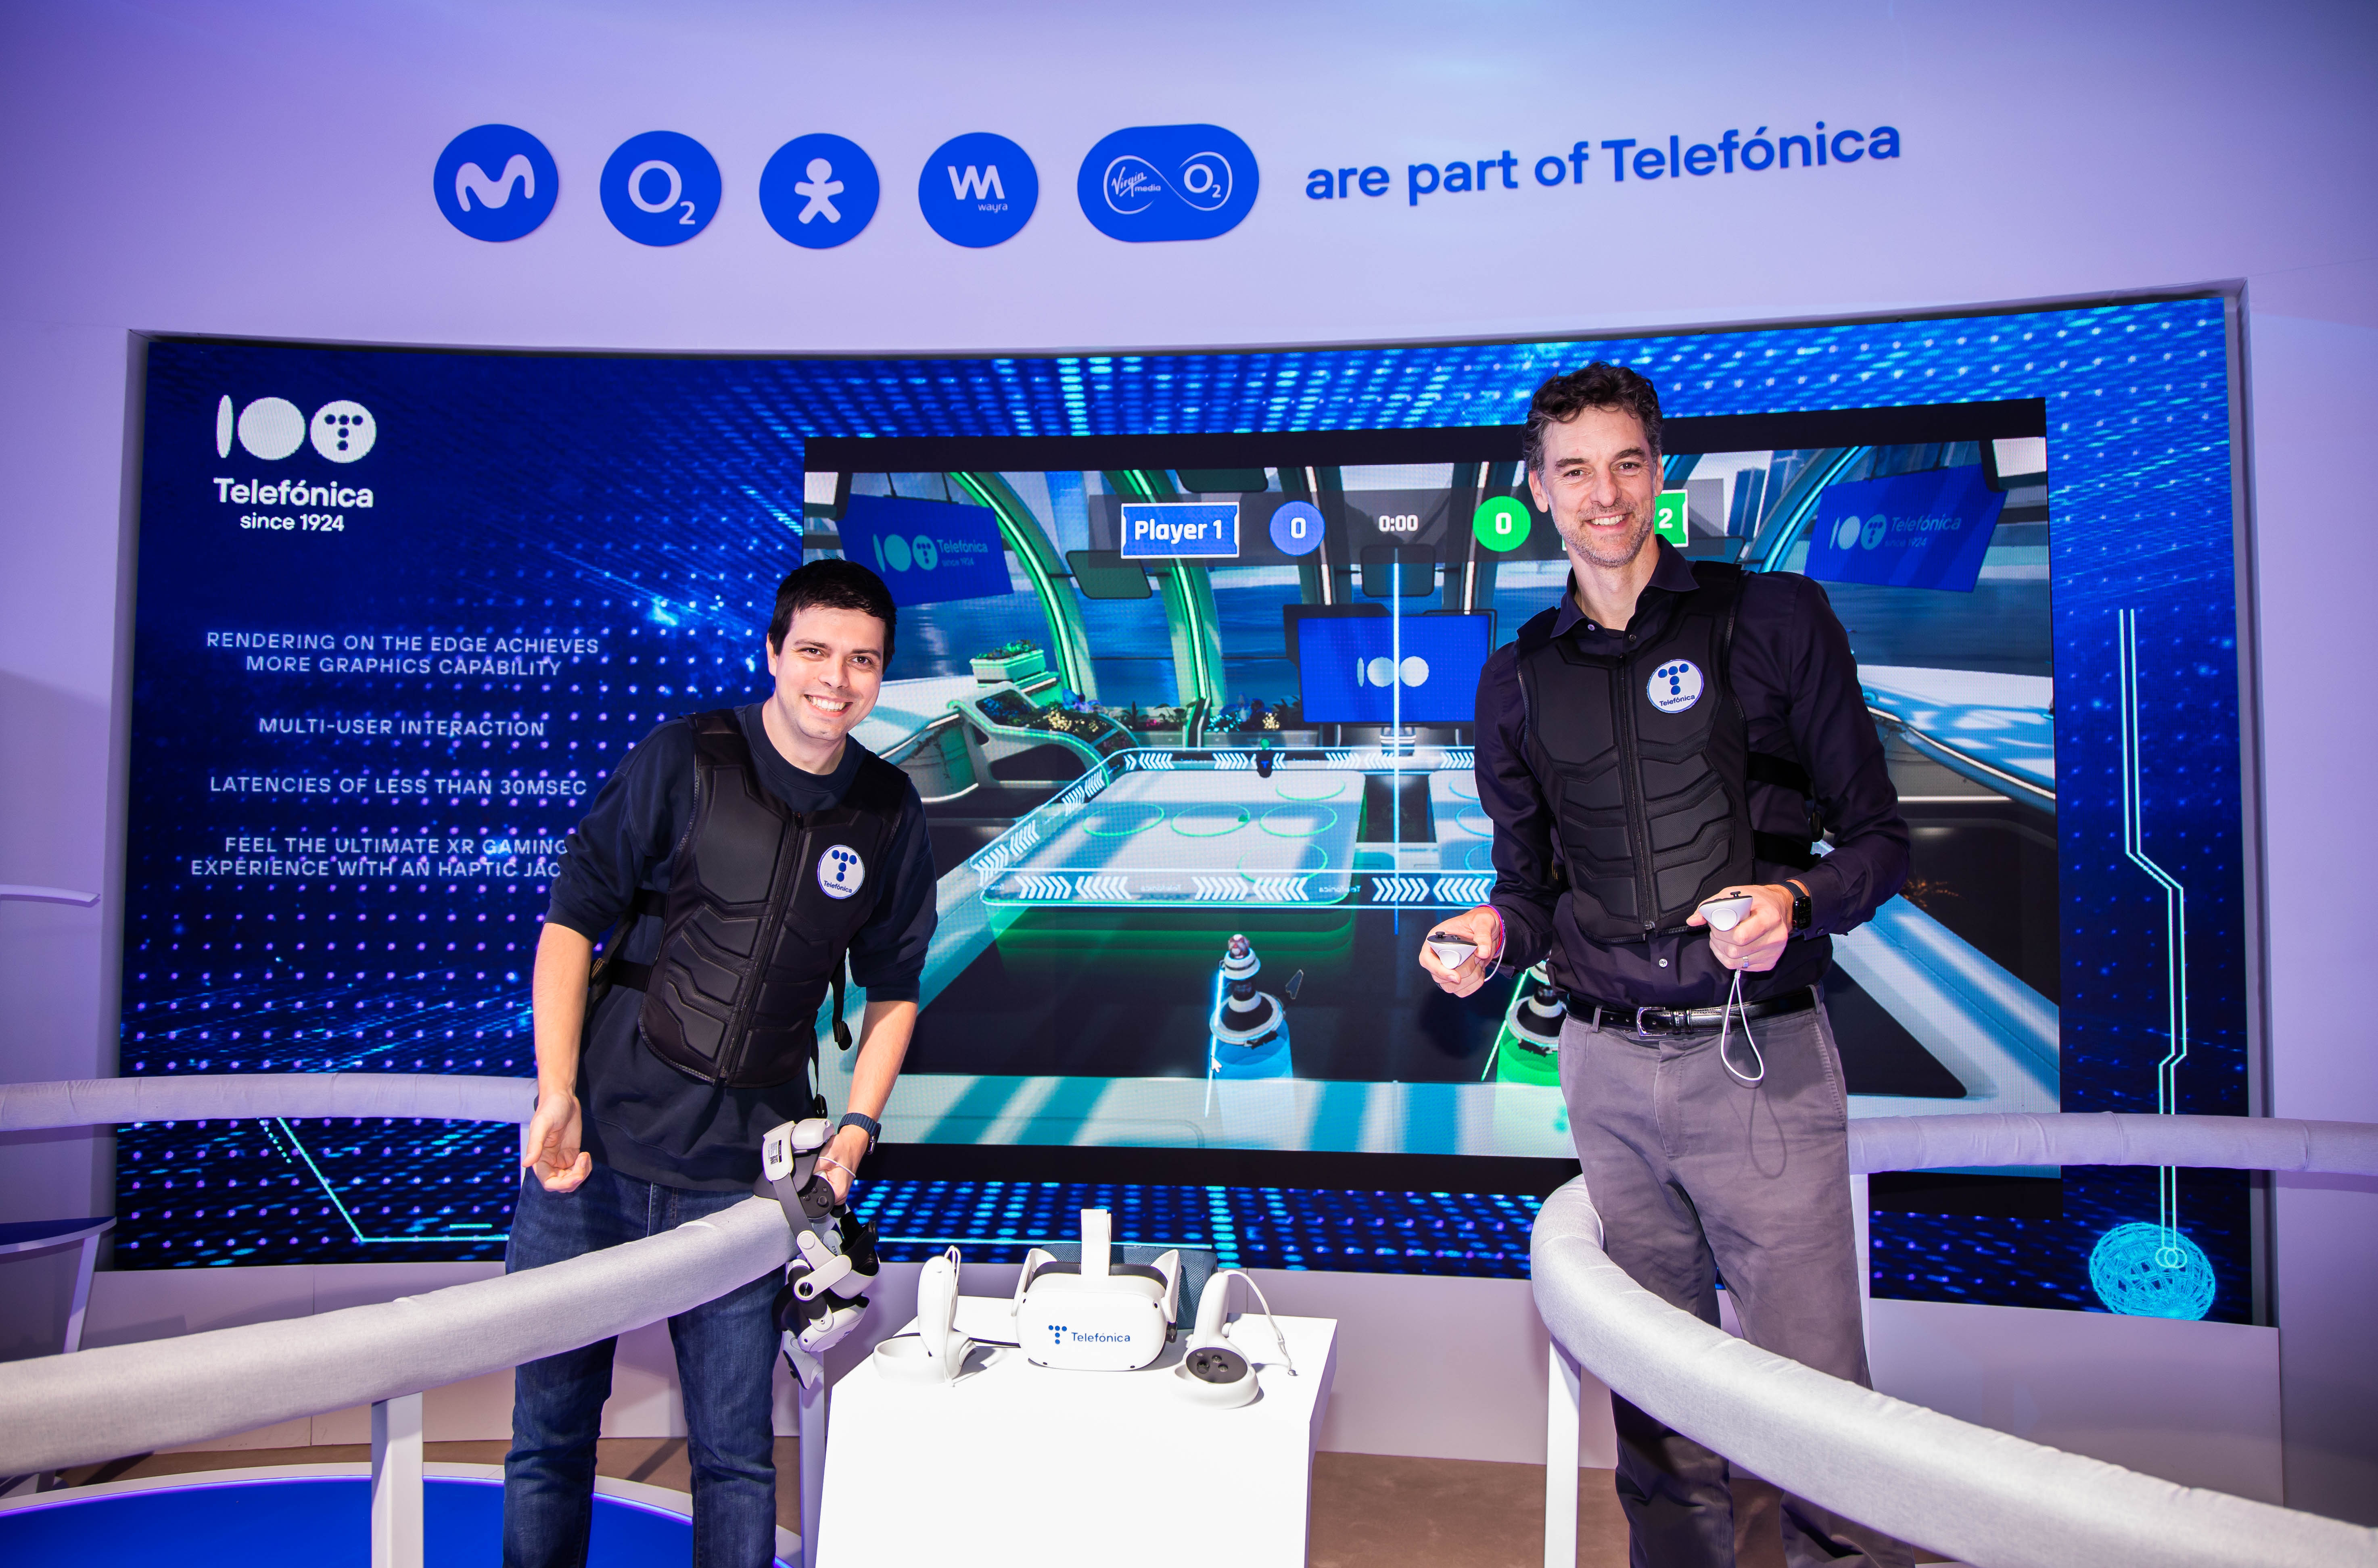 Pau García-Milà junto a Pau Gasol en la zona de demos del stand de Telefónica